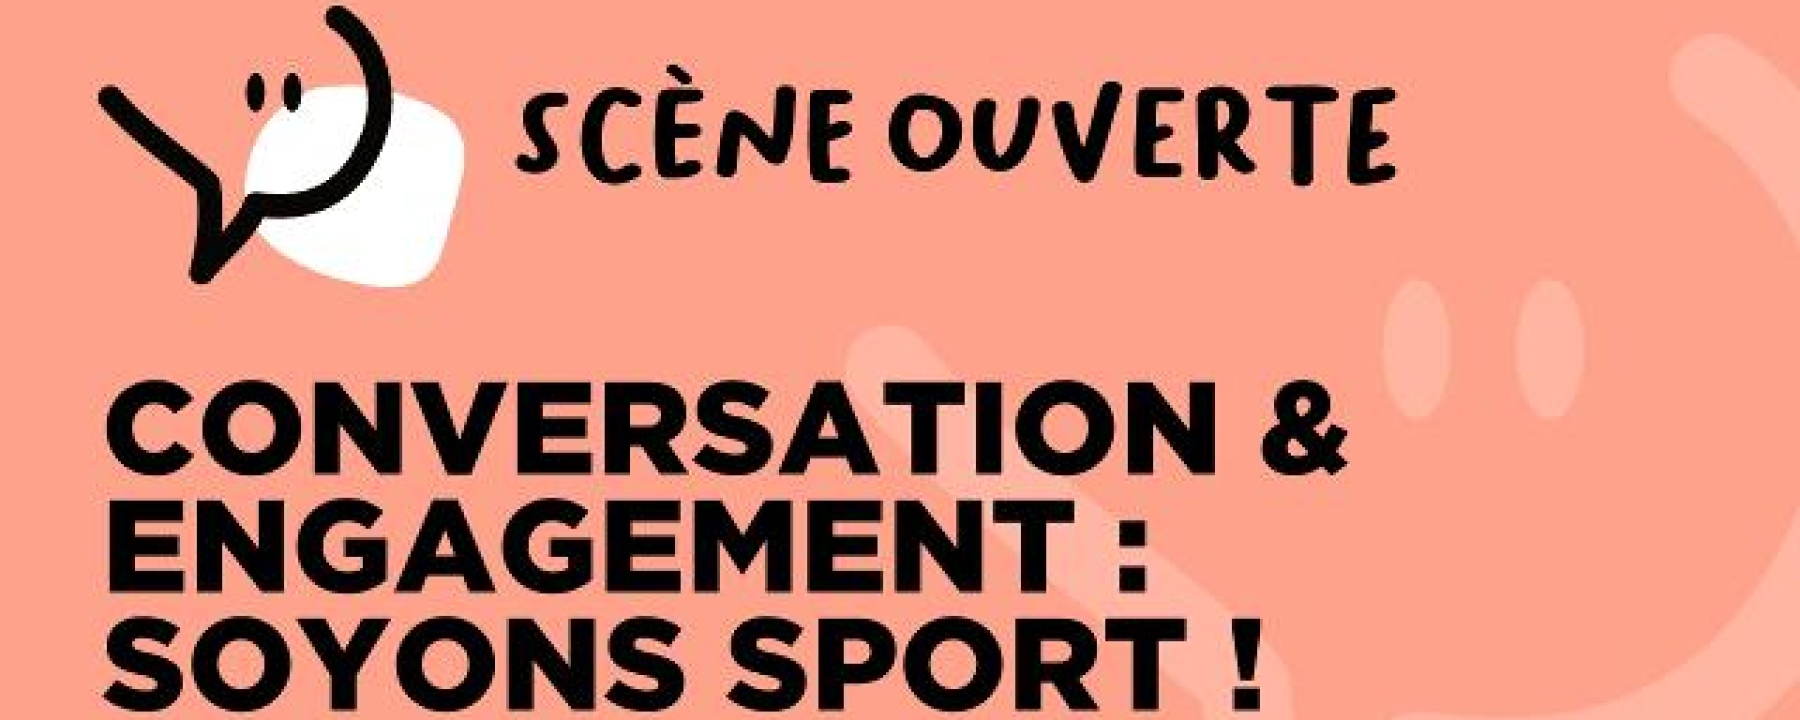 Conversation & engagement : soyons sport !